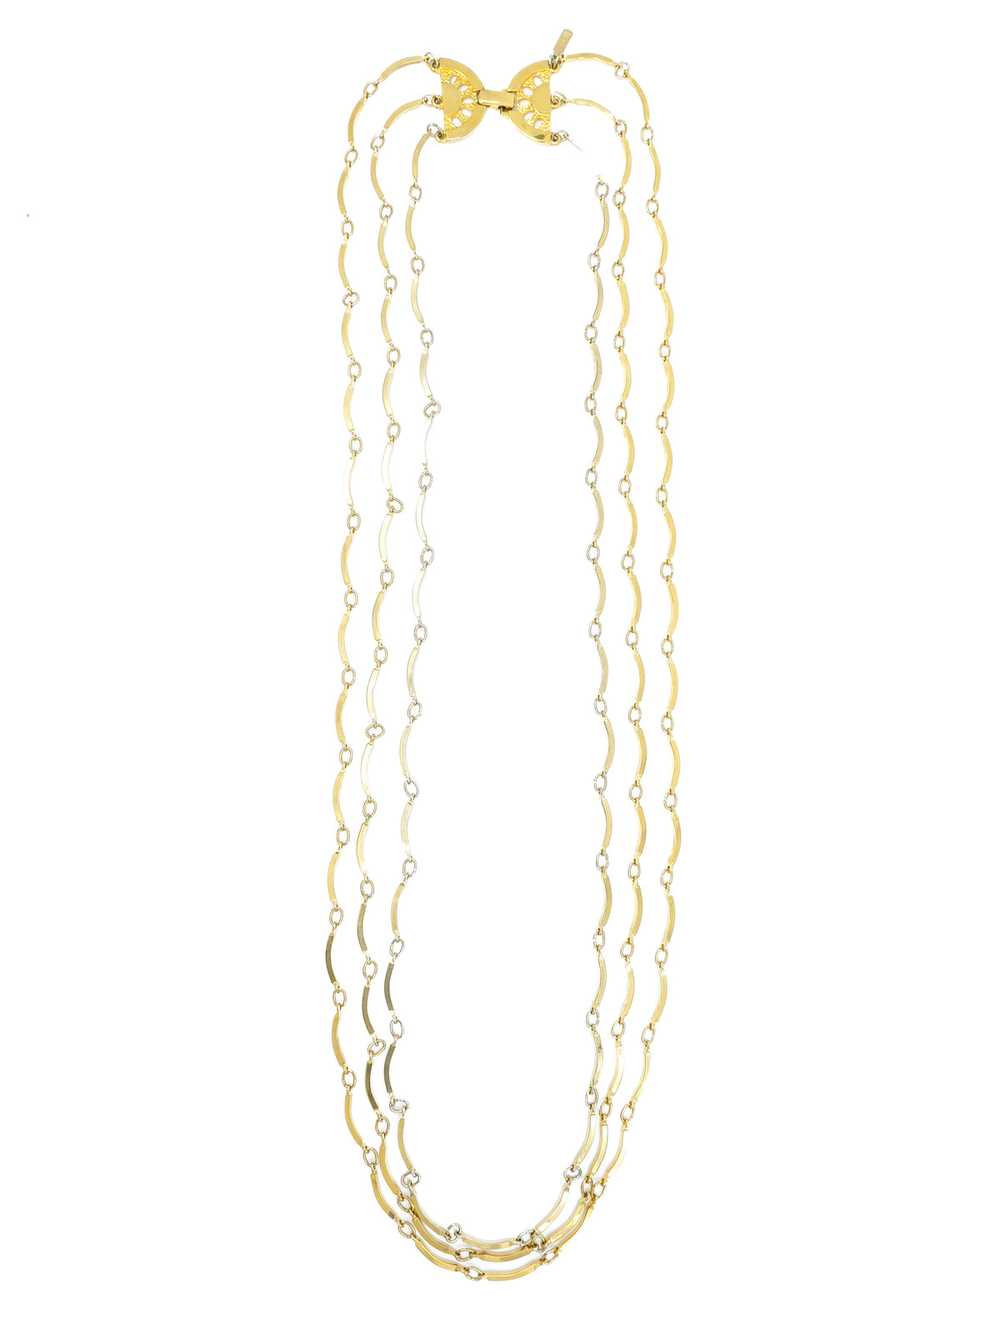 Yves Saint Laurent Three Strand Necklace - image 1